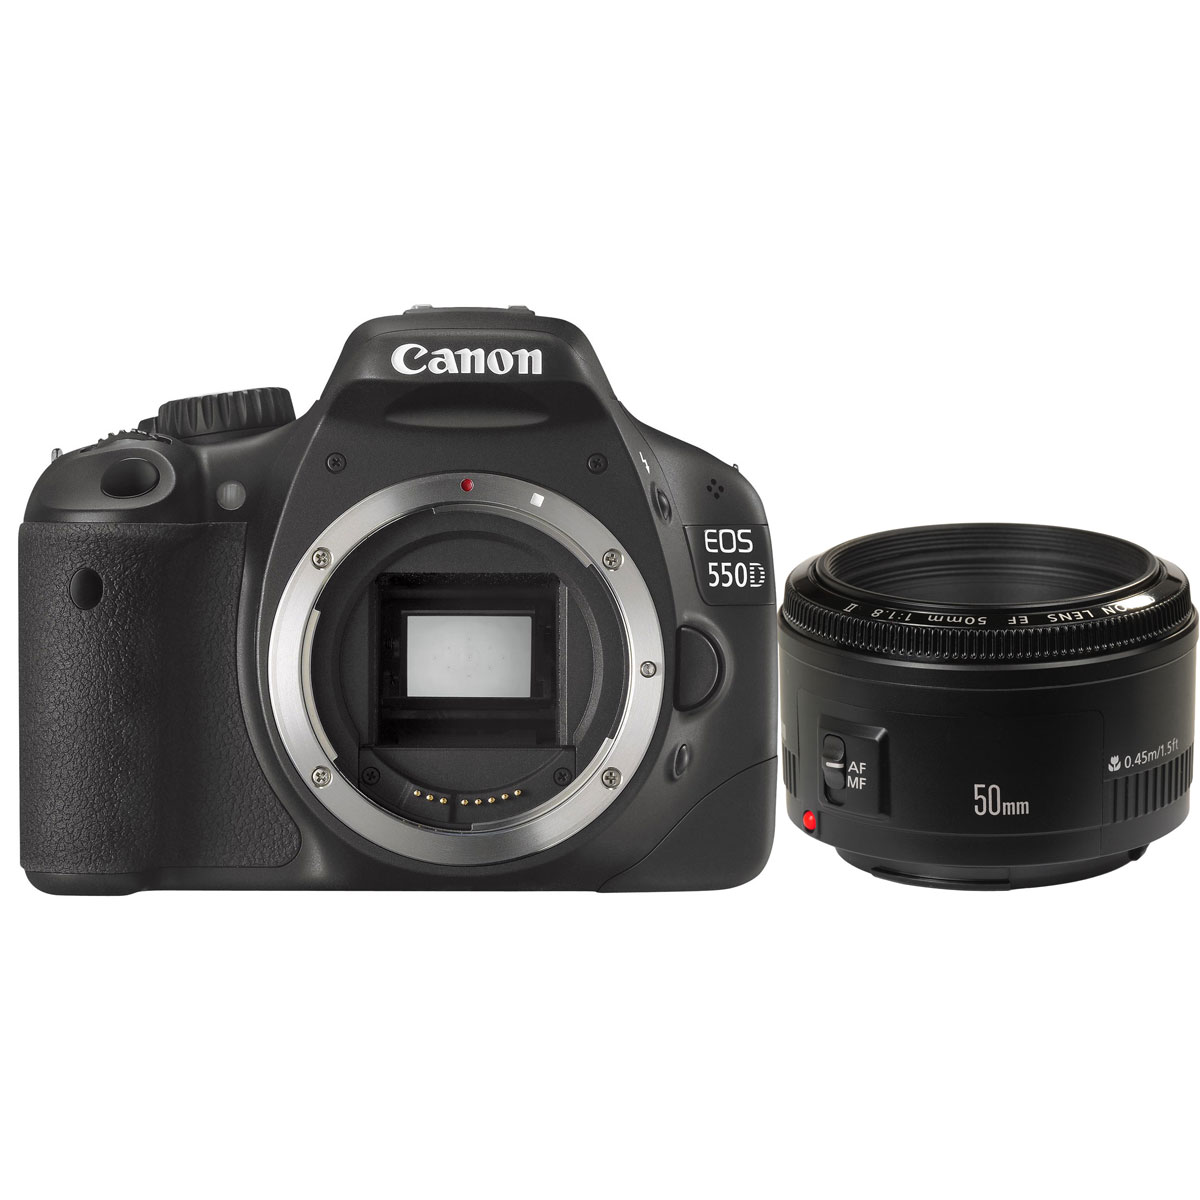 Canon EOS 550D + Objectif EF 50mm f/1.8 II - Appareil photo Reflex